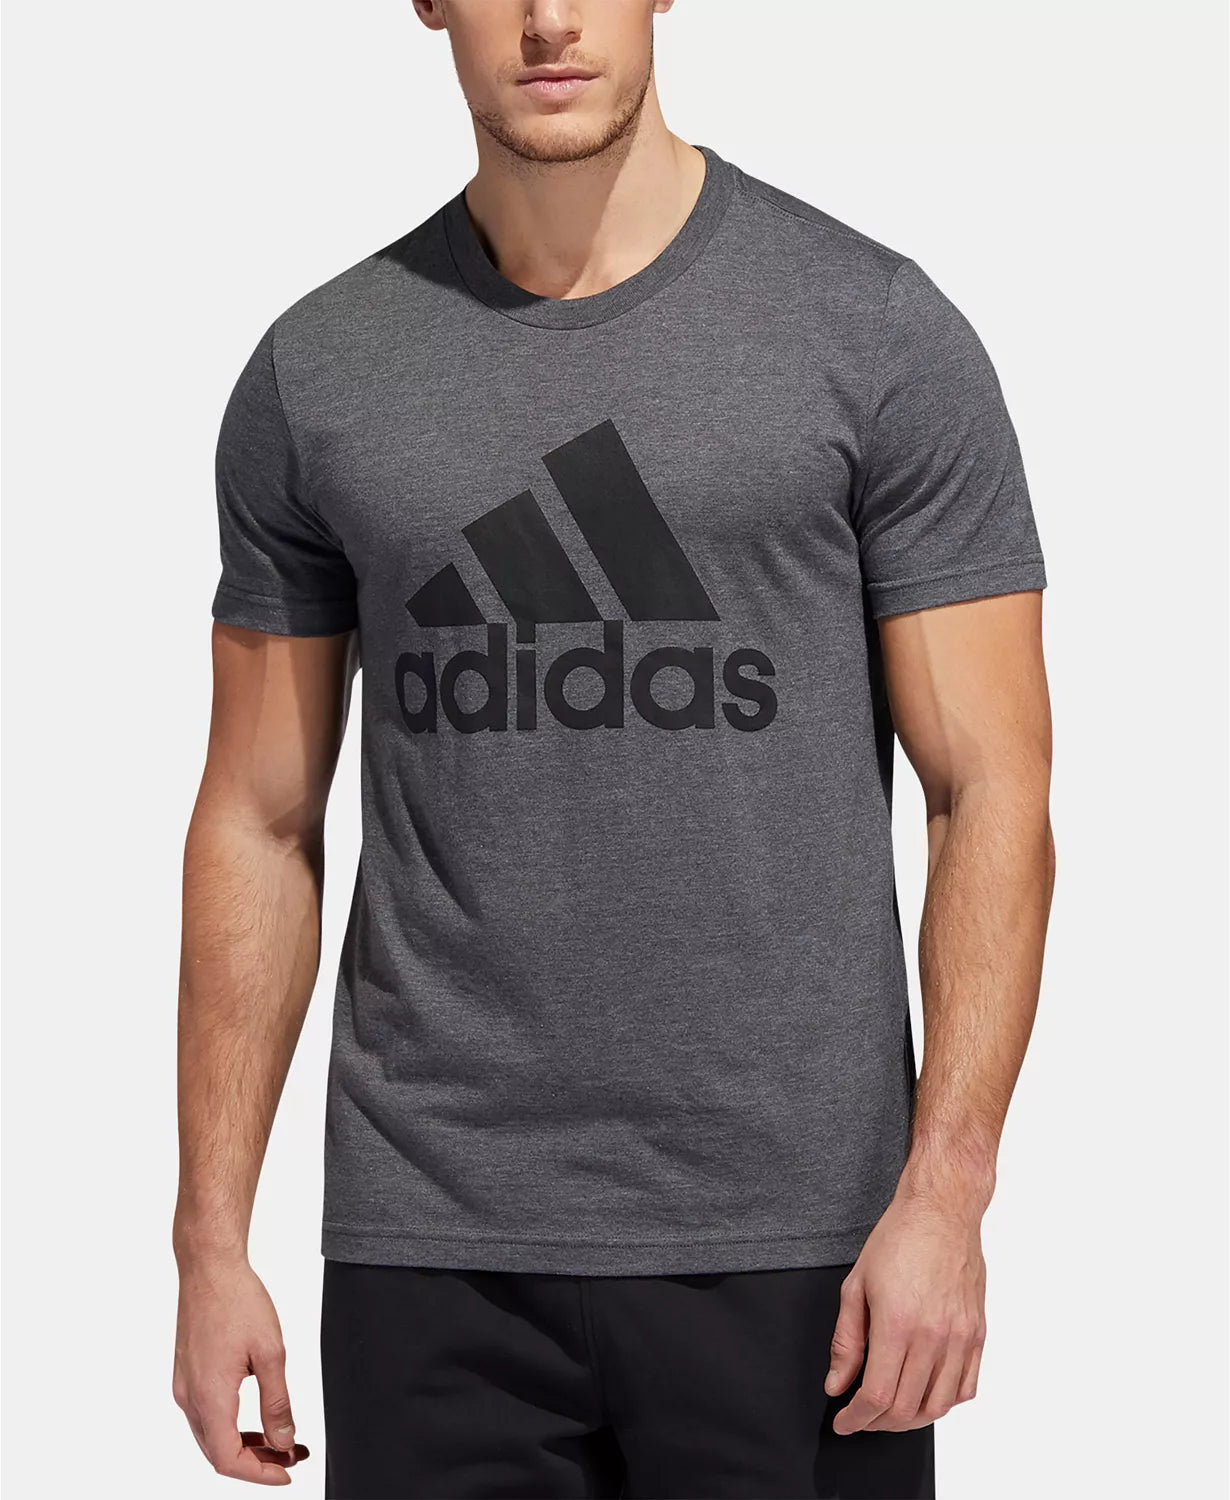 Adidas Men's Badge of Sport Logo T-Shirt New Premium Outlet